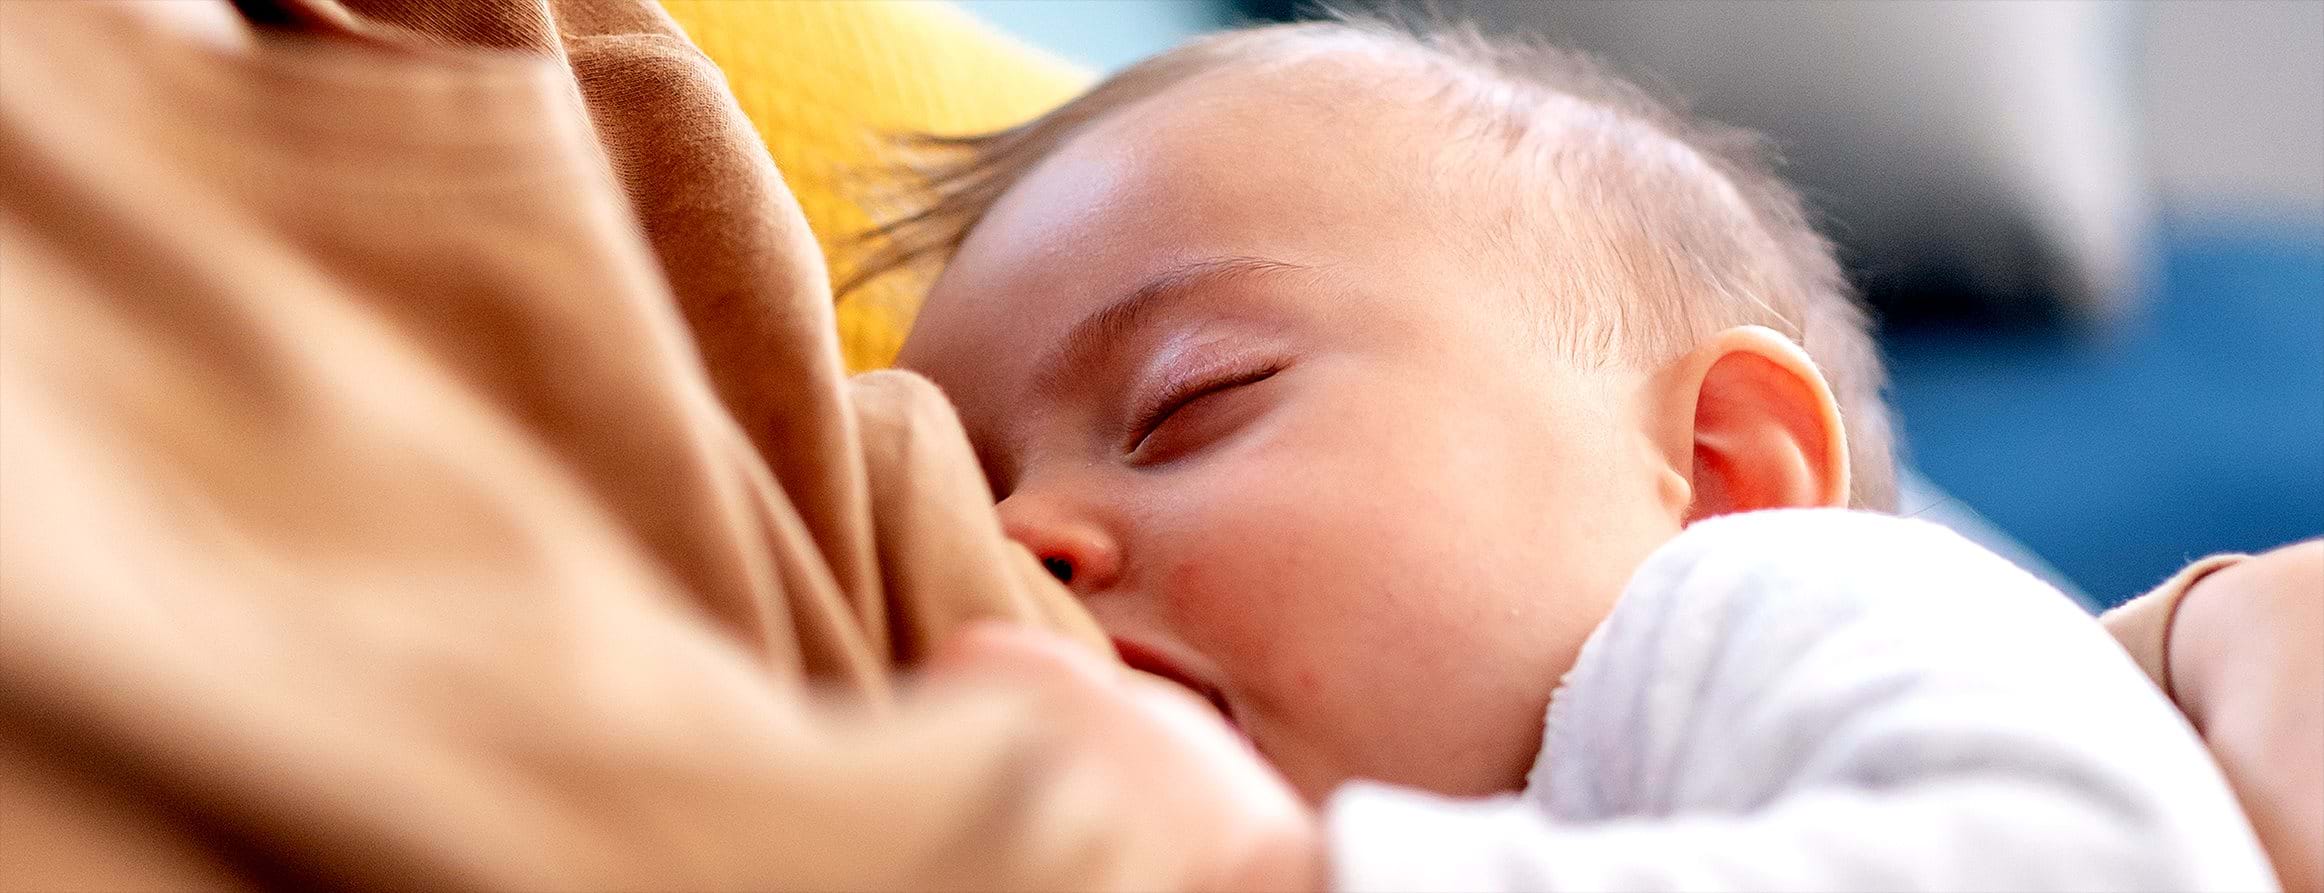 Photo of infant breastfeeding.